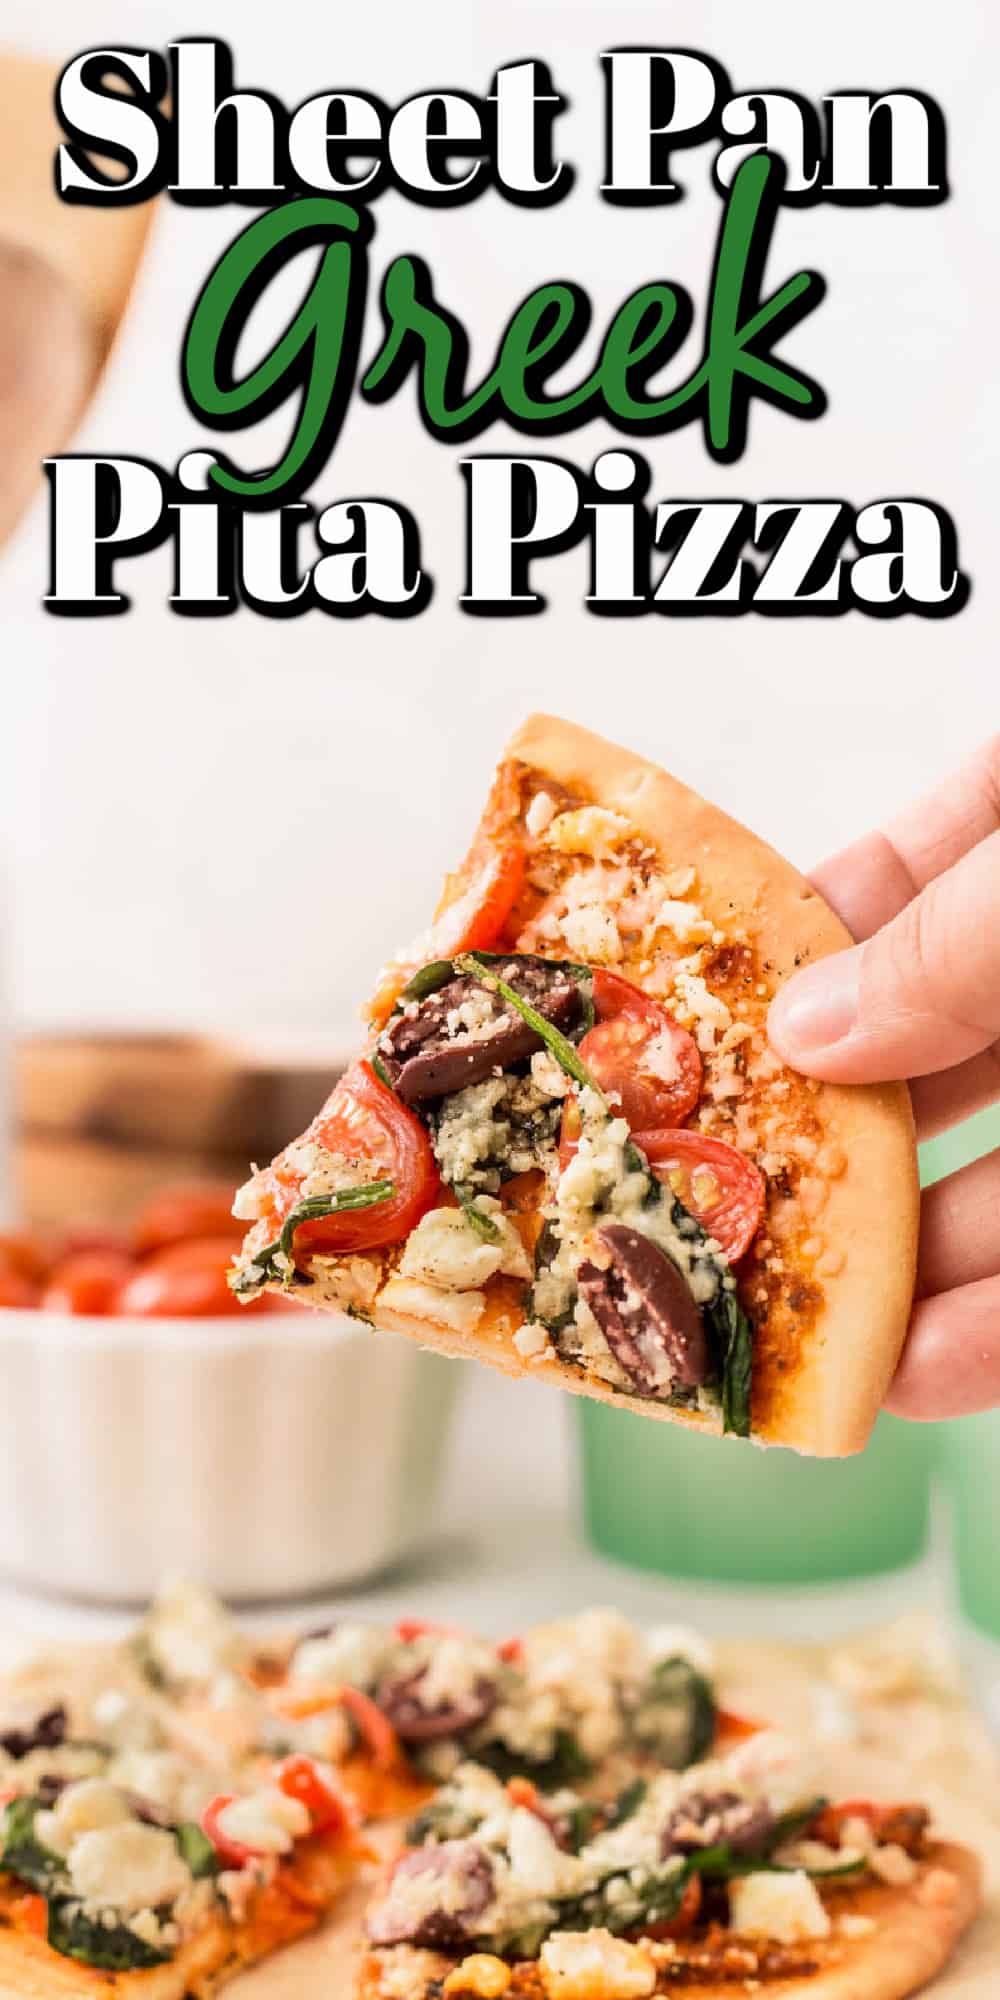 Sheet Pan Greek Pita Pizza Pin